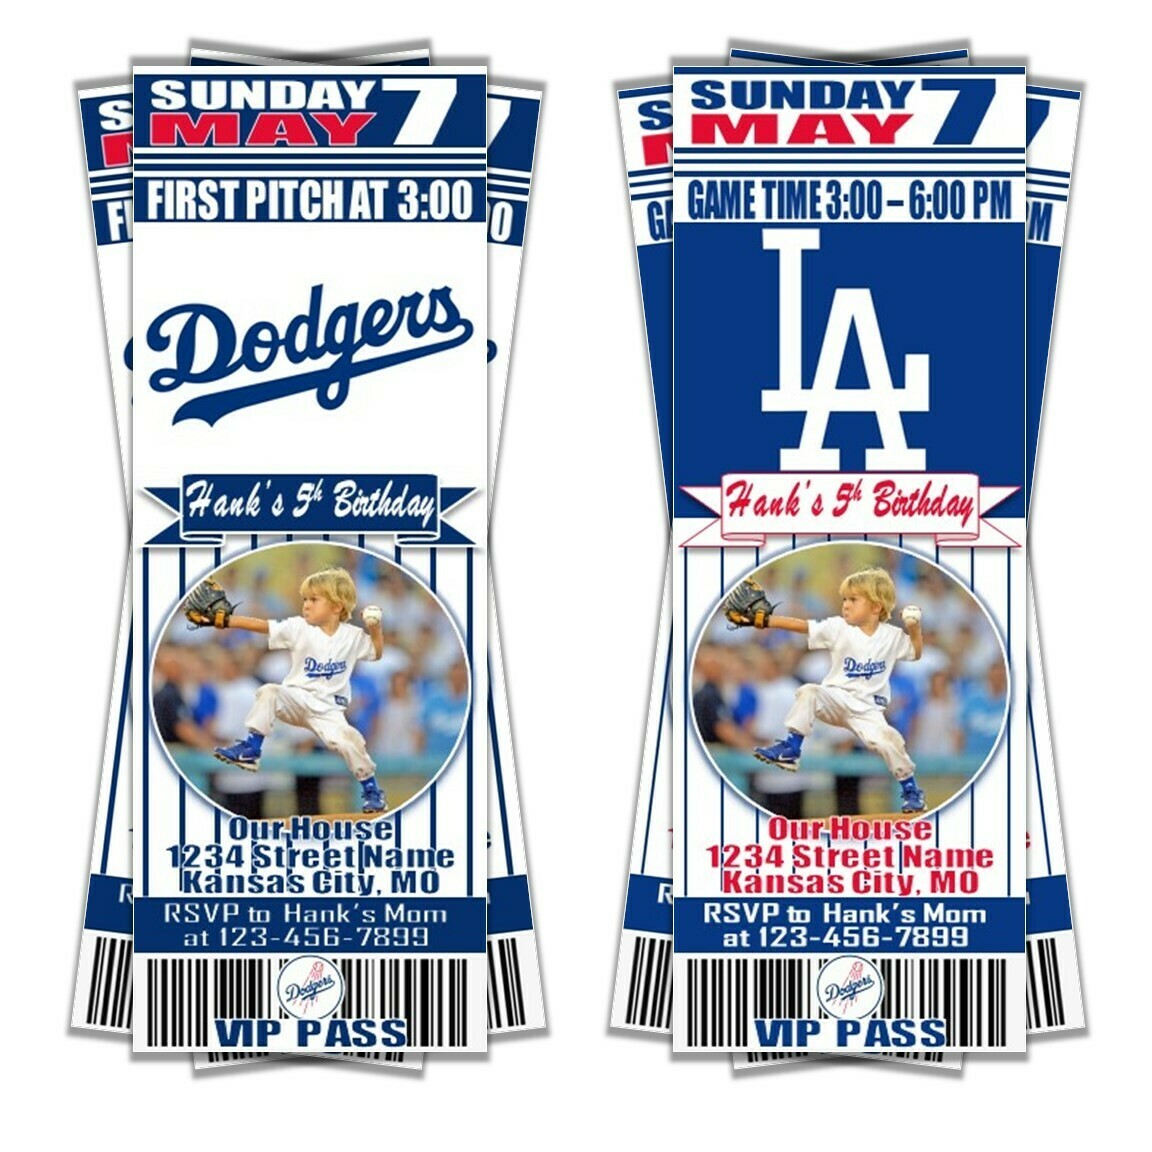 La Dodgers Game Ticket Gift Voucher Printable Surprise Baseball Tickets 